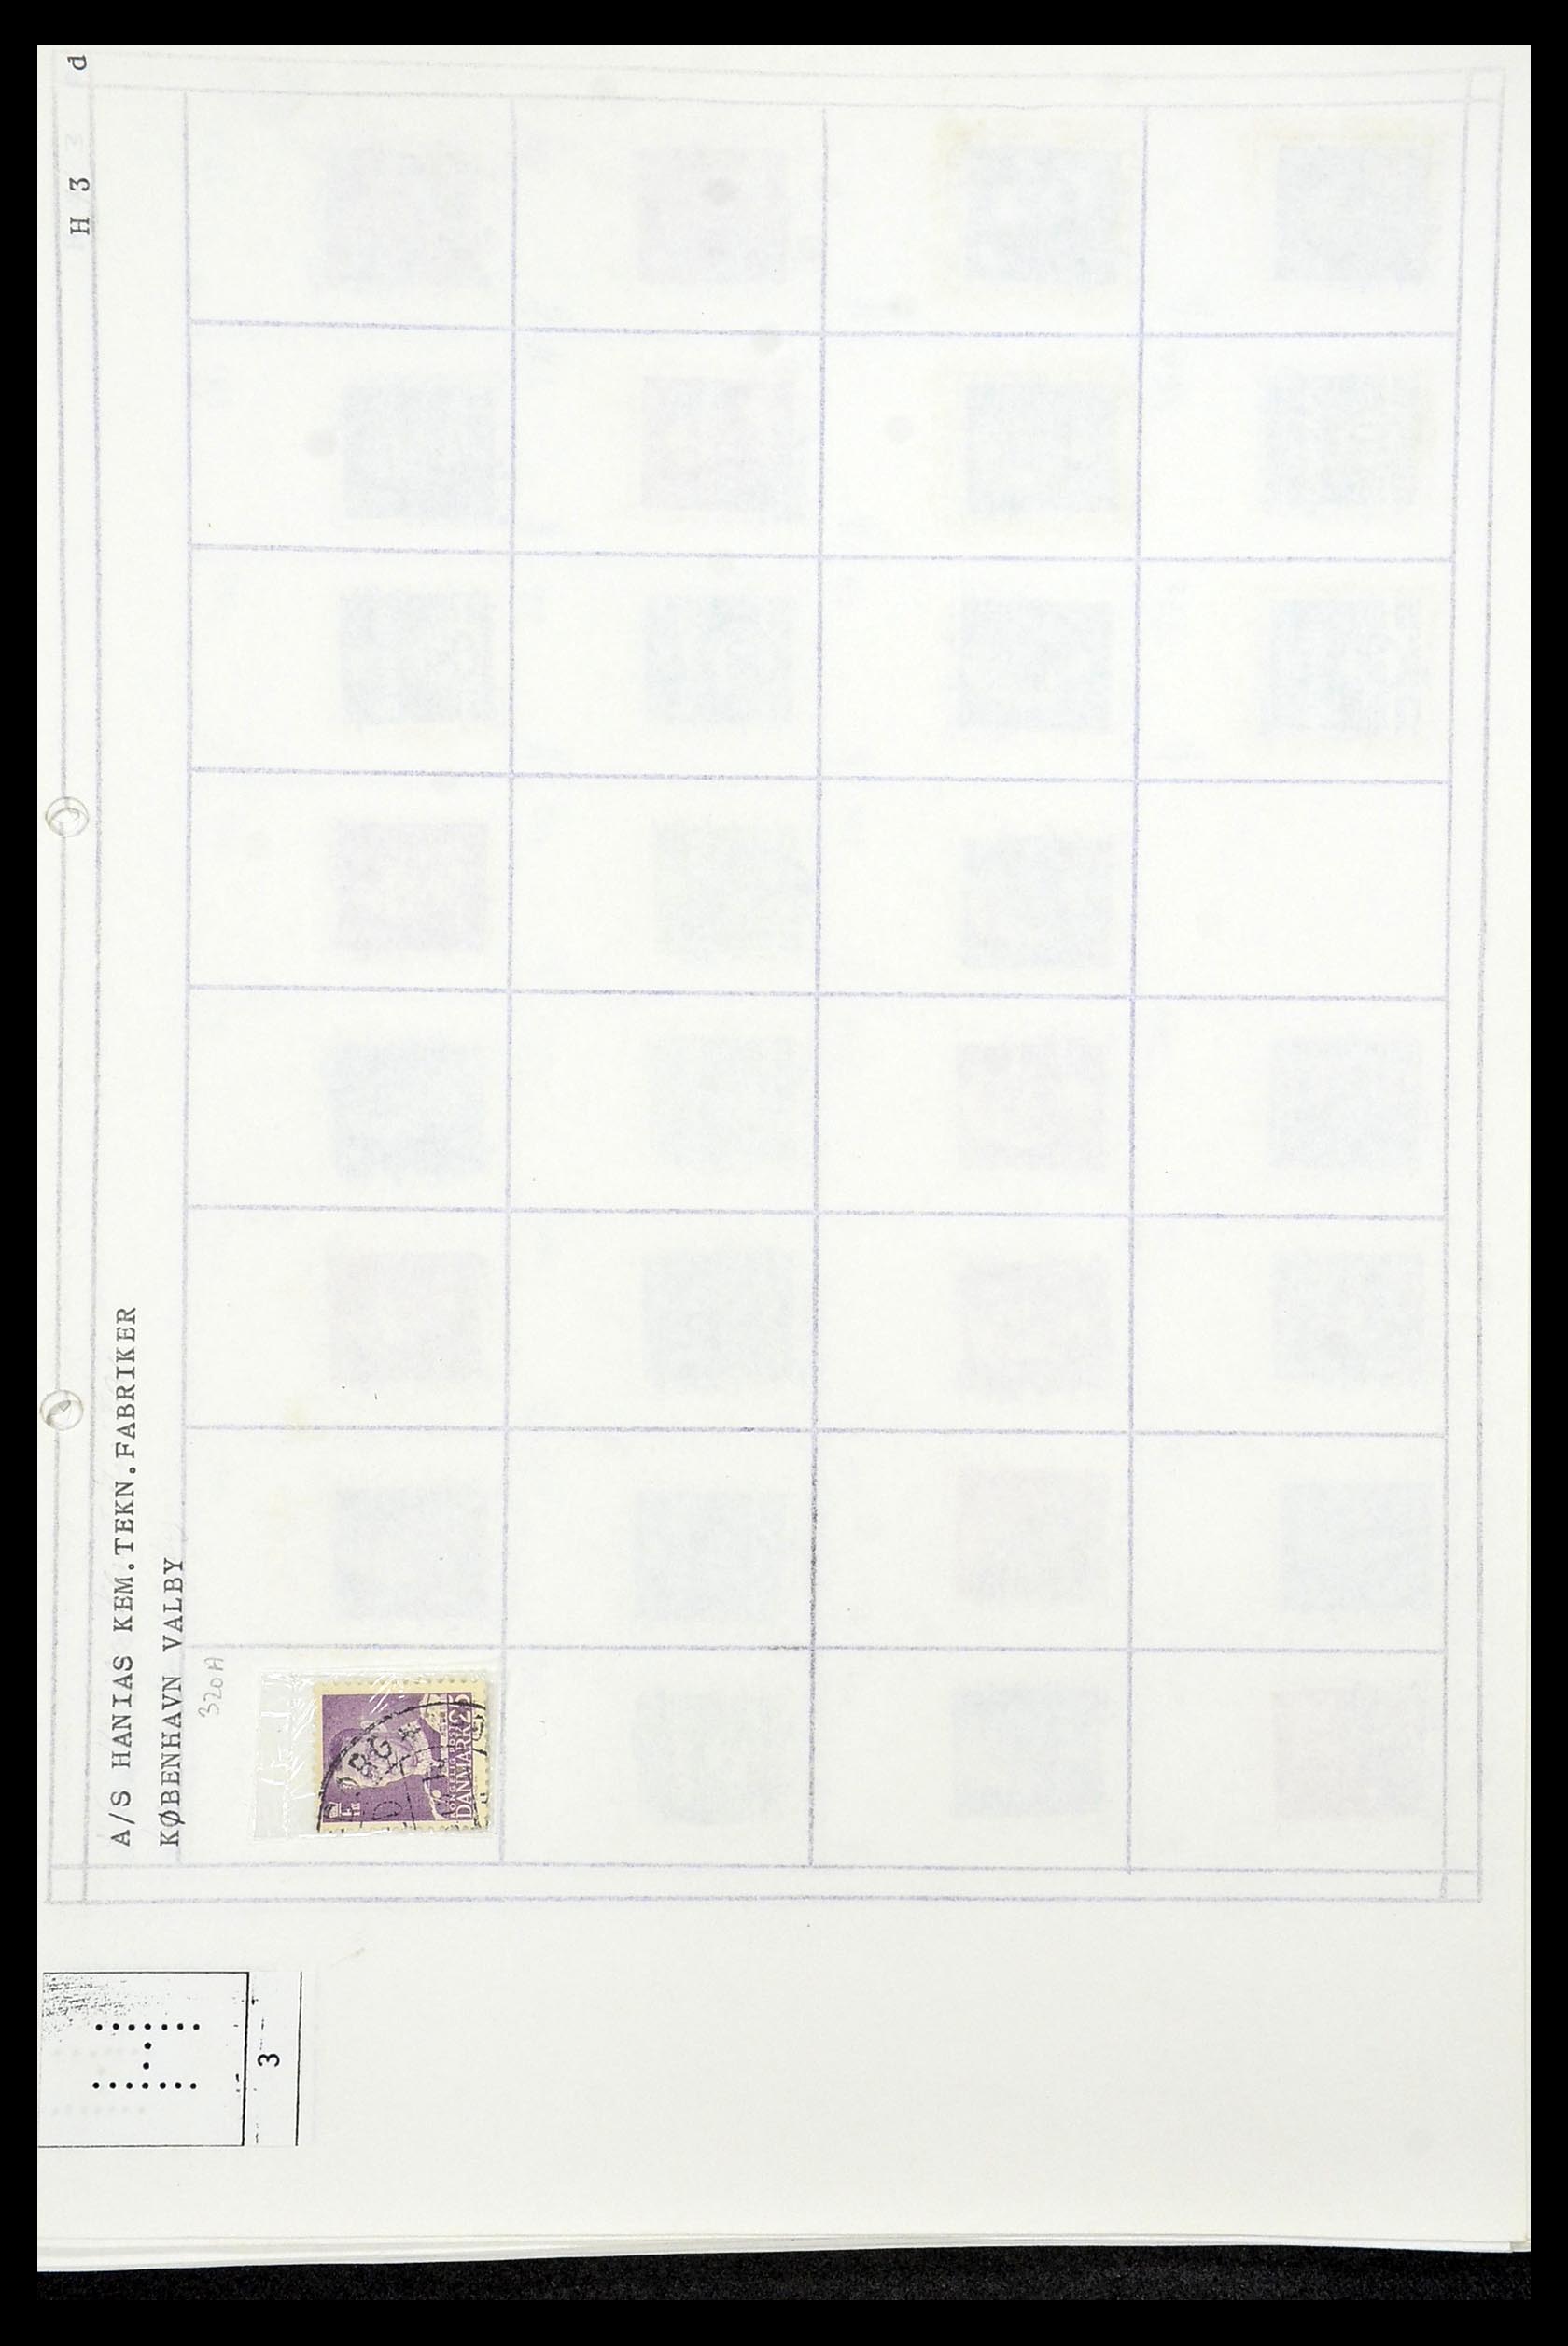 34415 120 - Stamp Collection 34415 Denmark perfins 1875-1980.